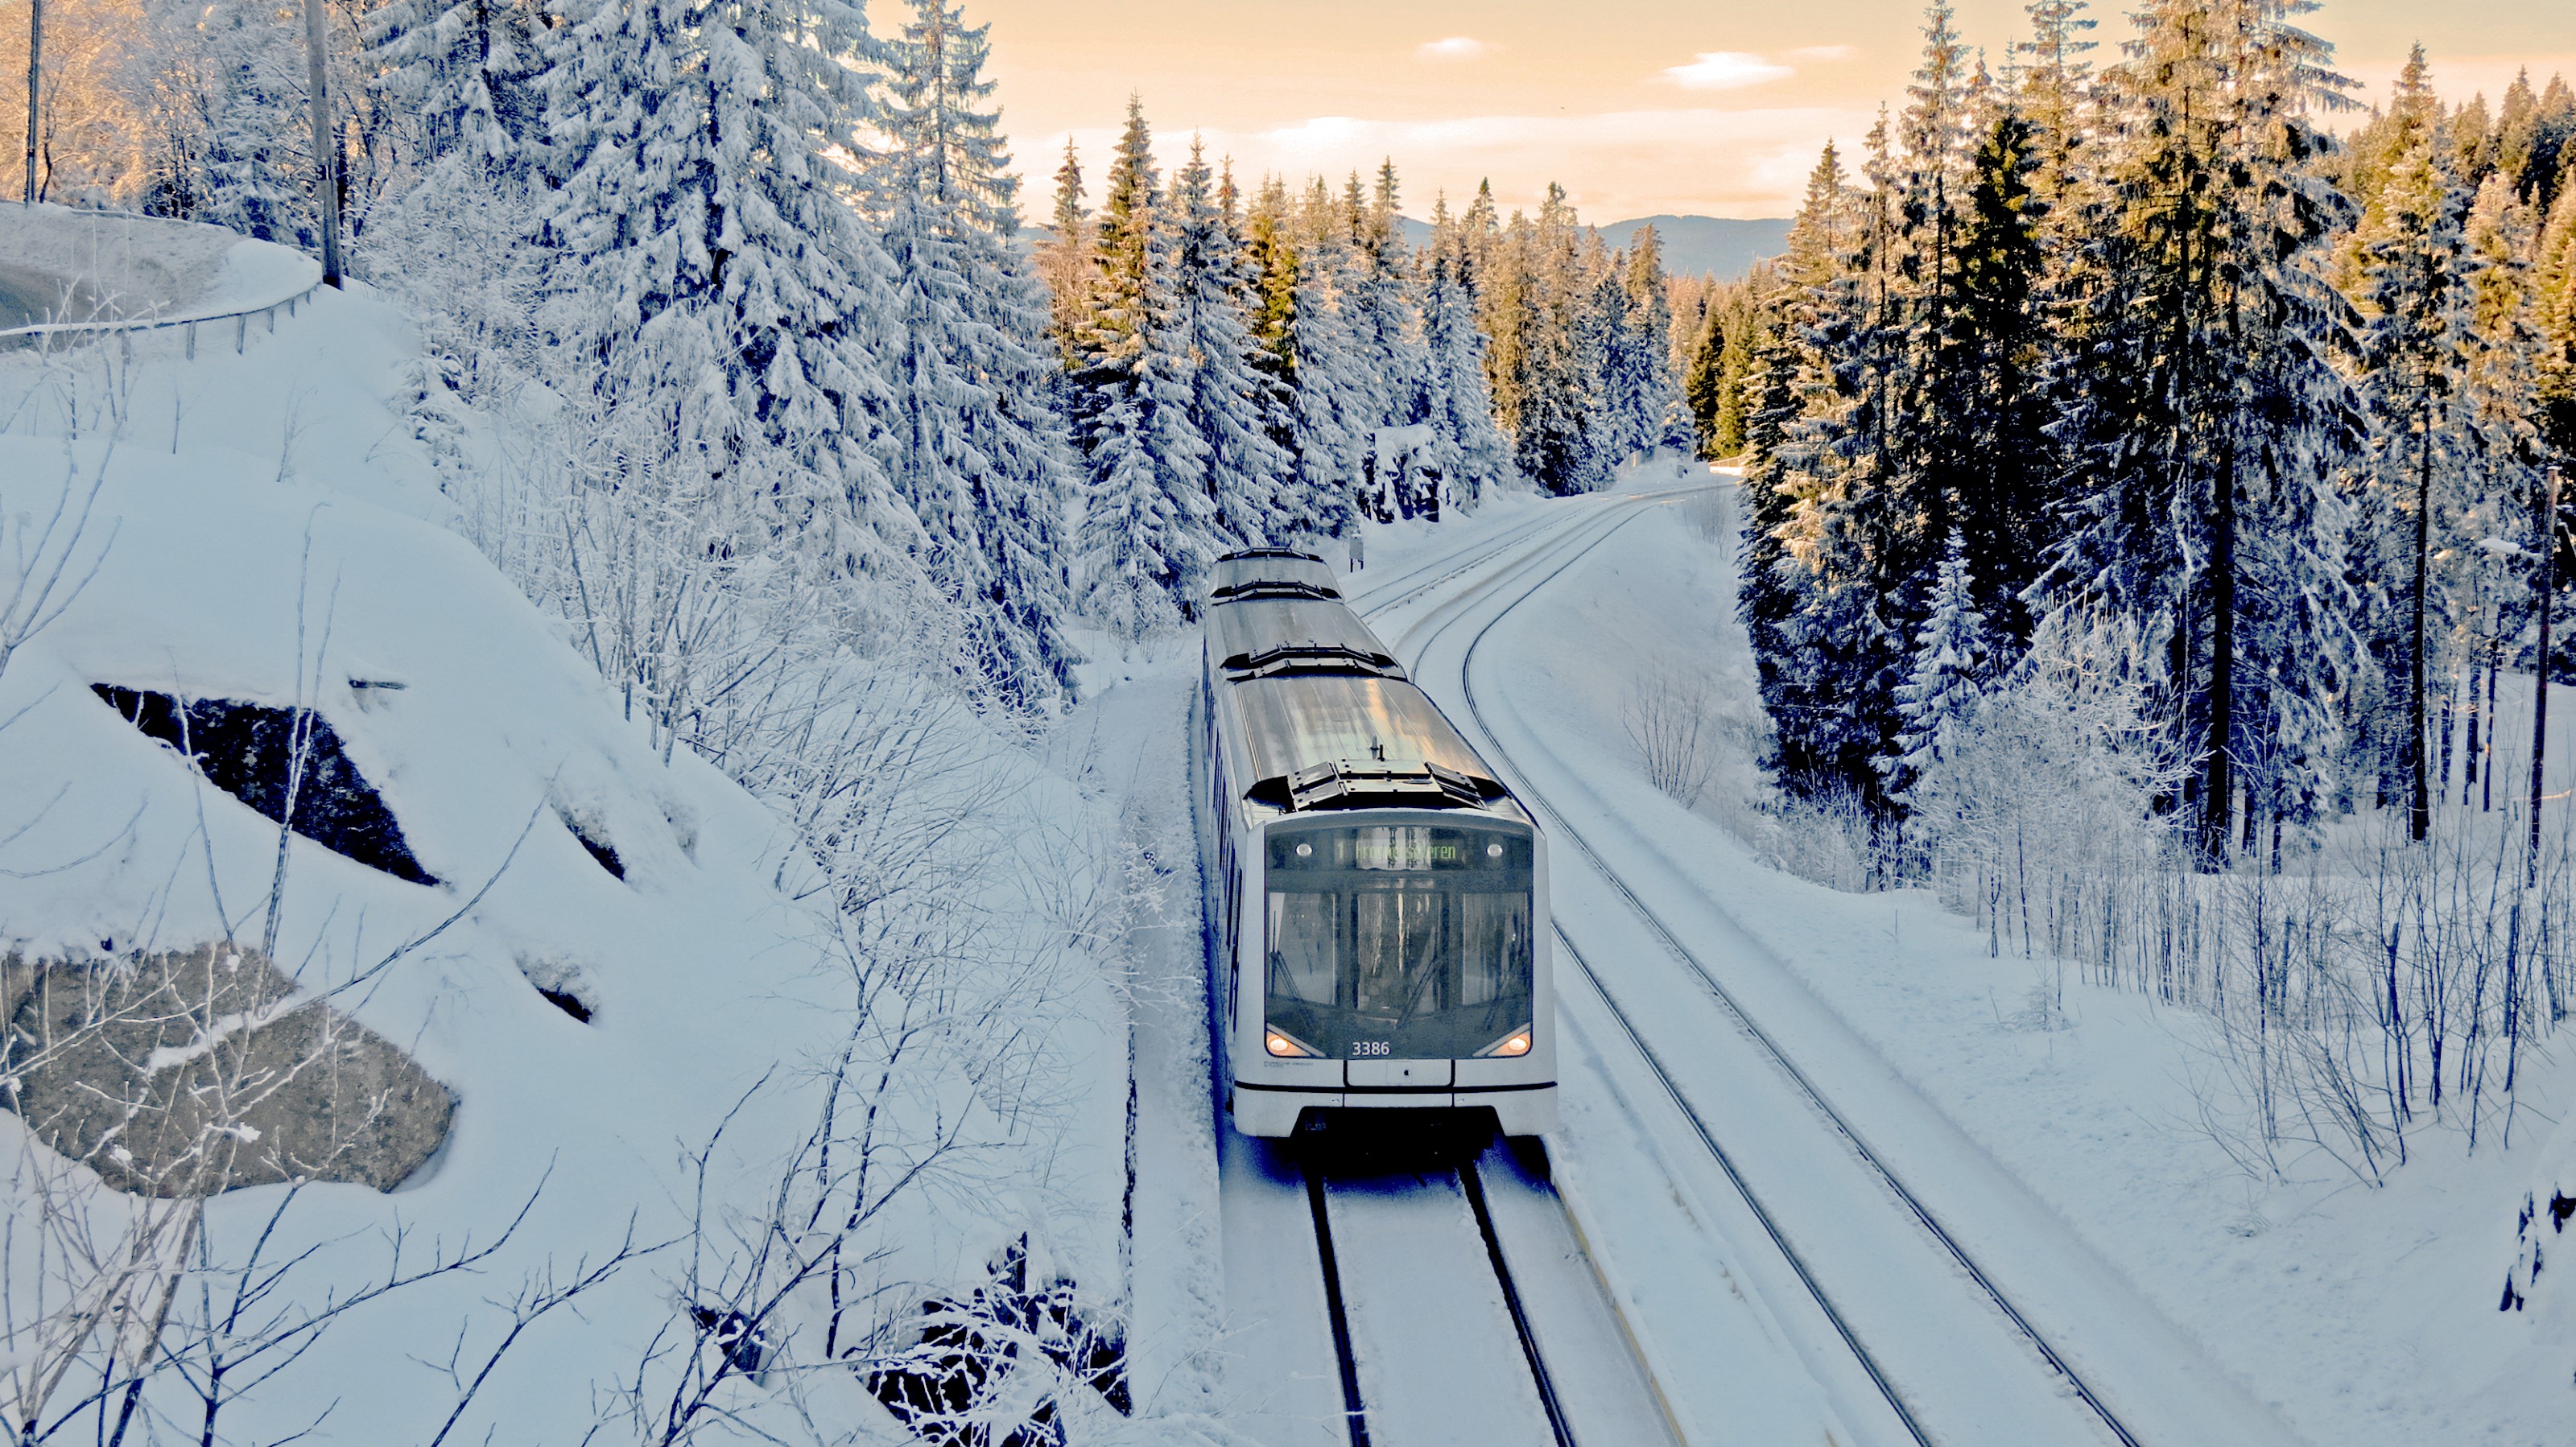 Winter in Oslo, Norway | Suggested winter activities